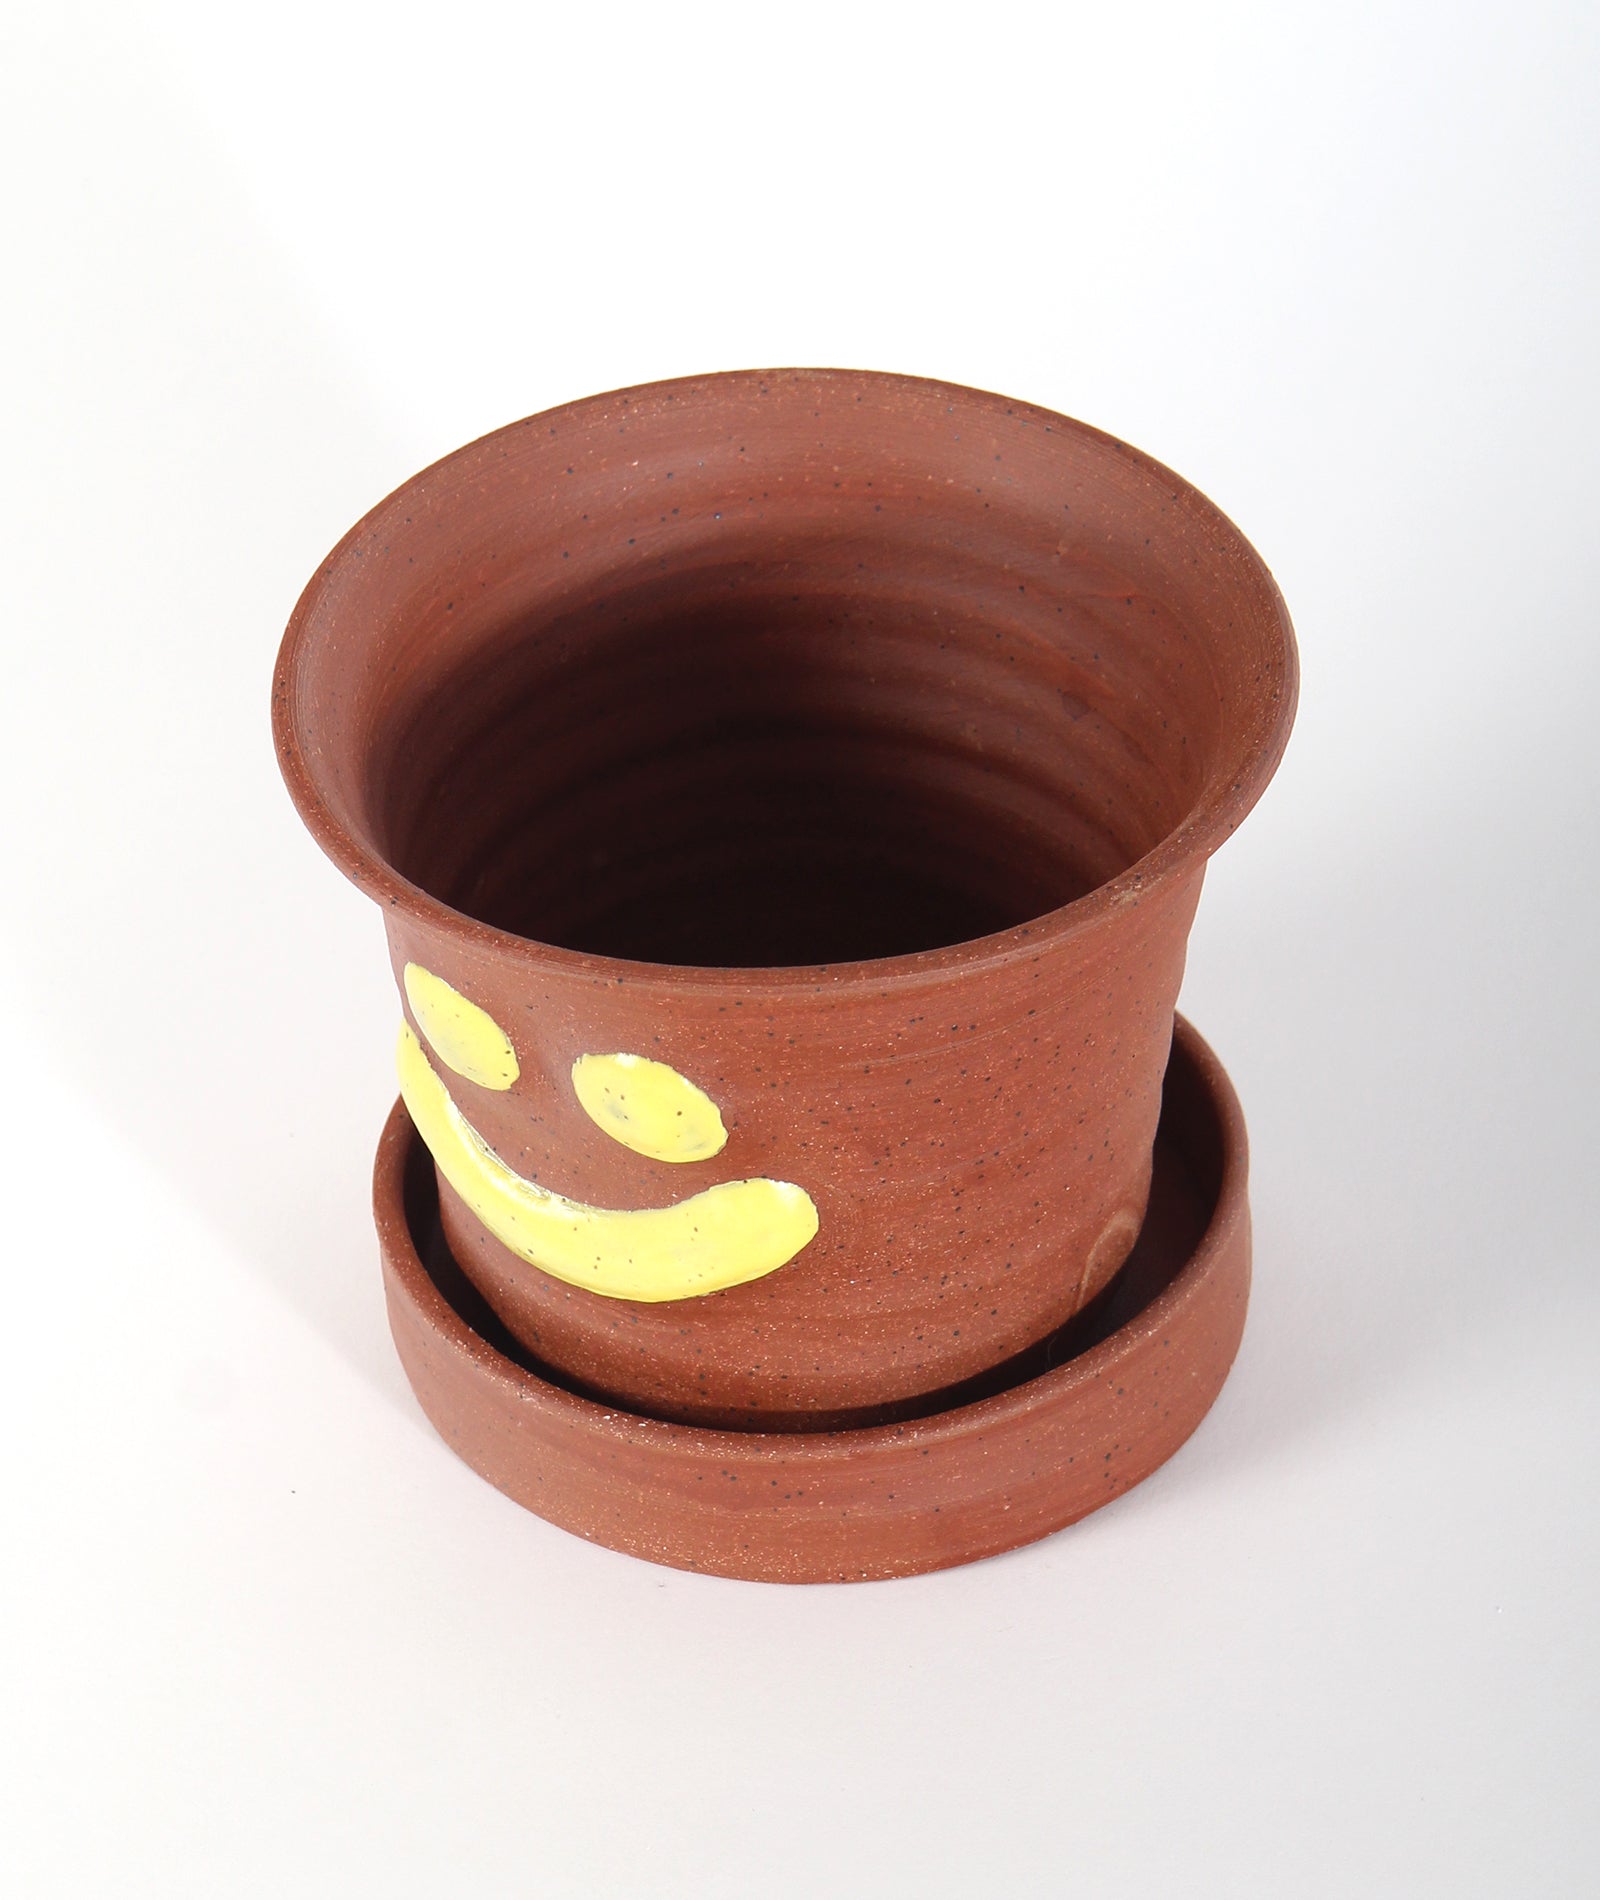 The Smiley Plant Pot